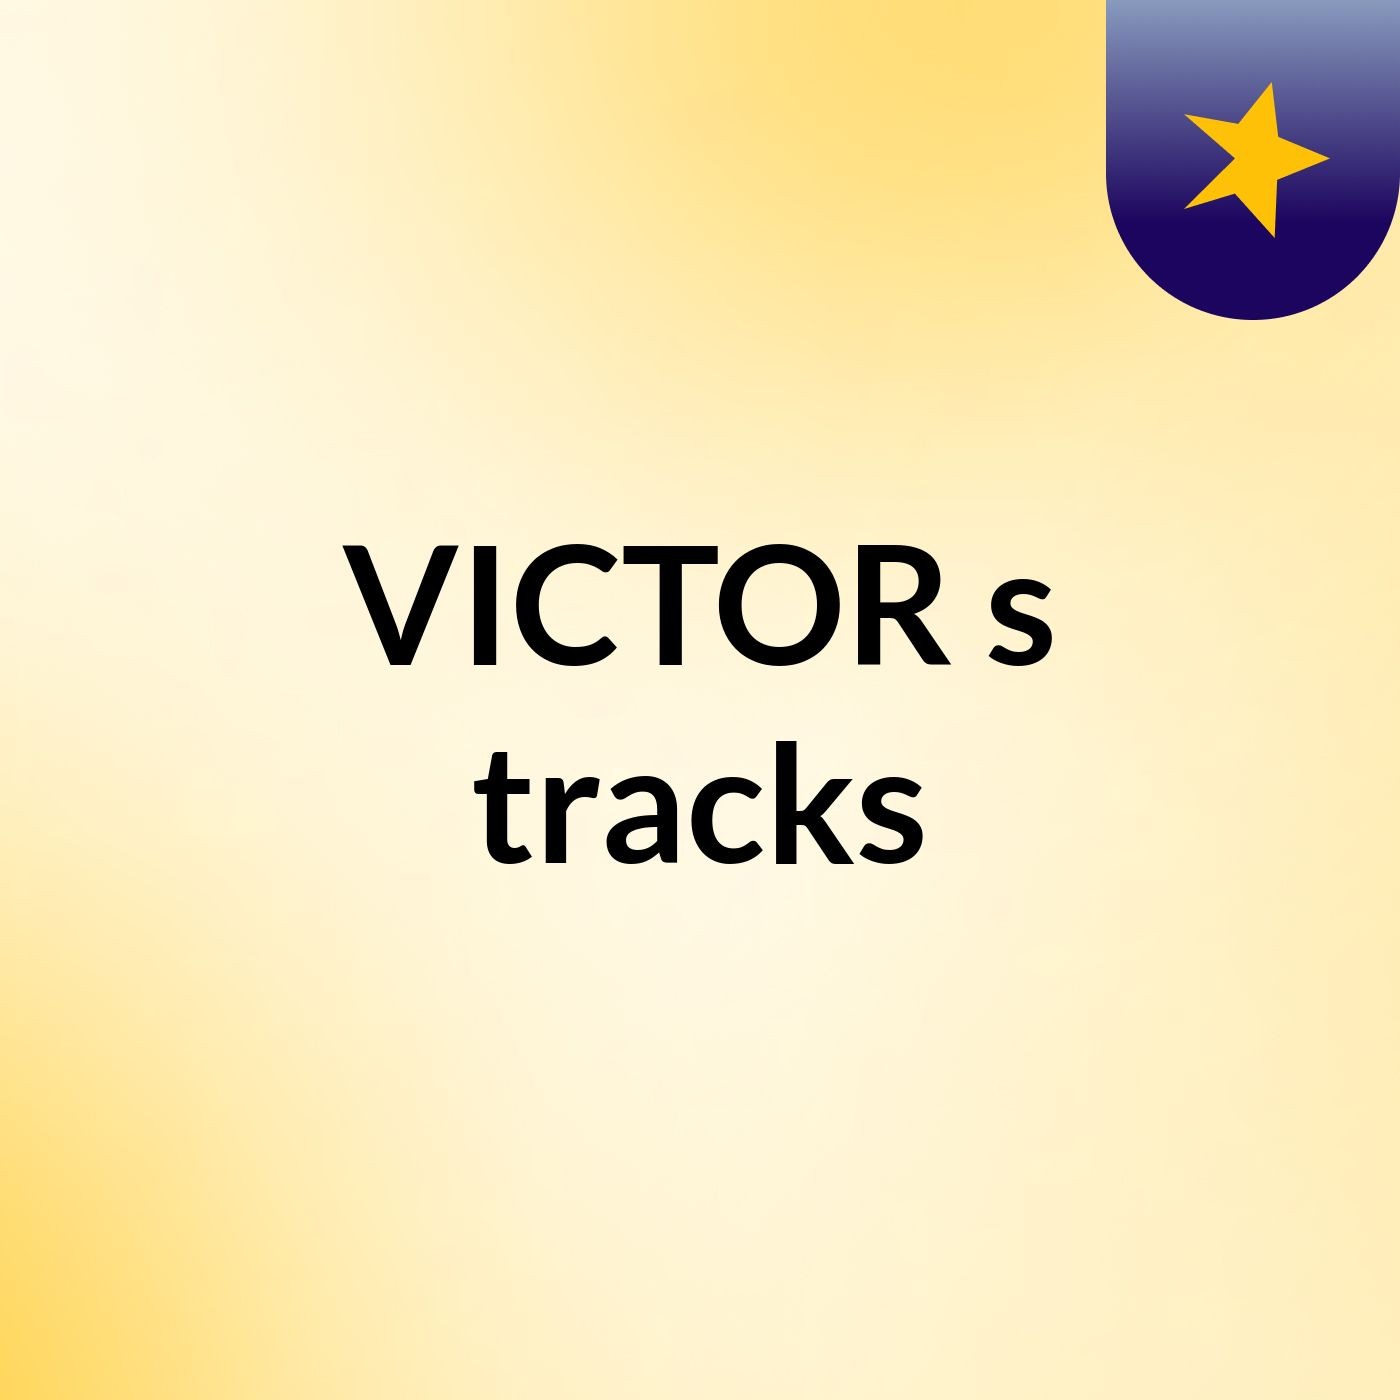 VICTOR's tracks